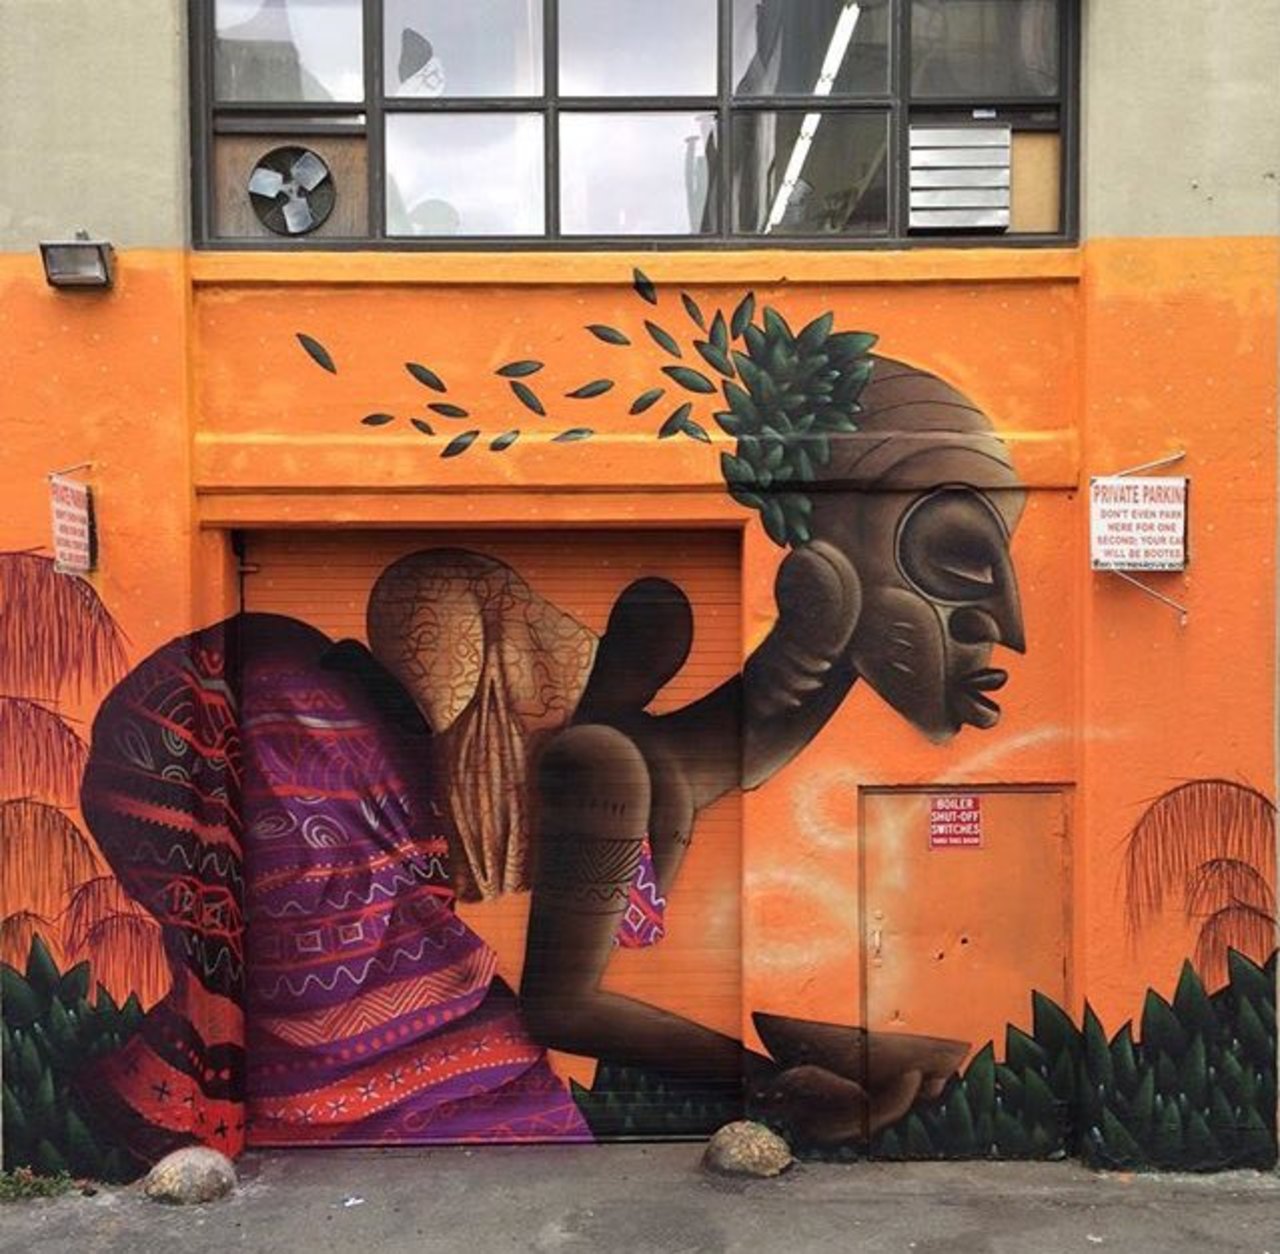 RT @rechercheaction: New Street Art by Alexandre Keto in NYC 

#art #graffiti #mural #streetart https://t.co/97CyRGQms2